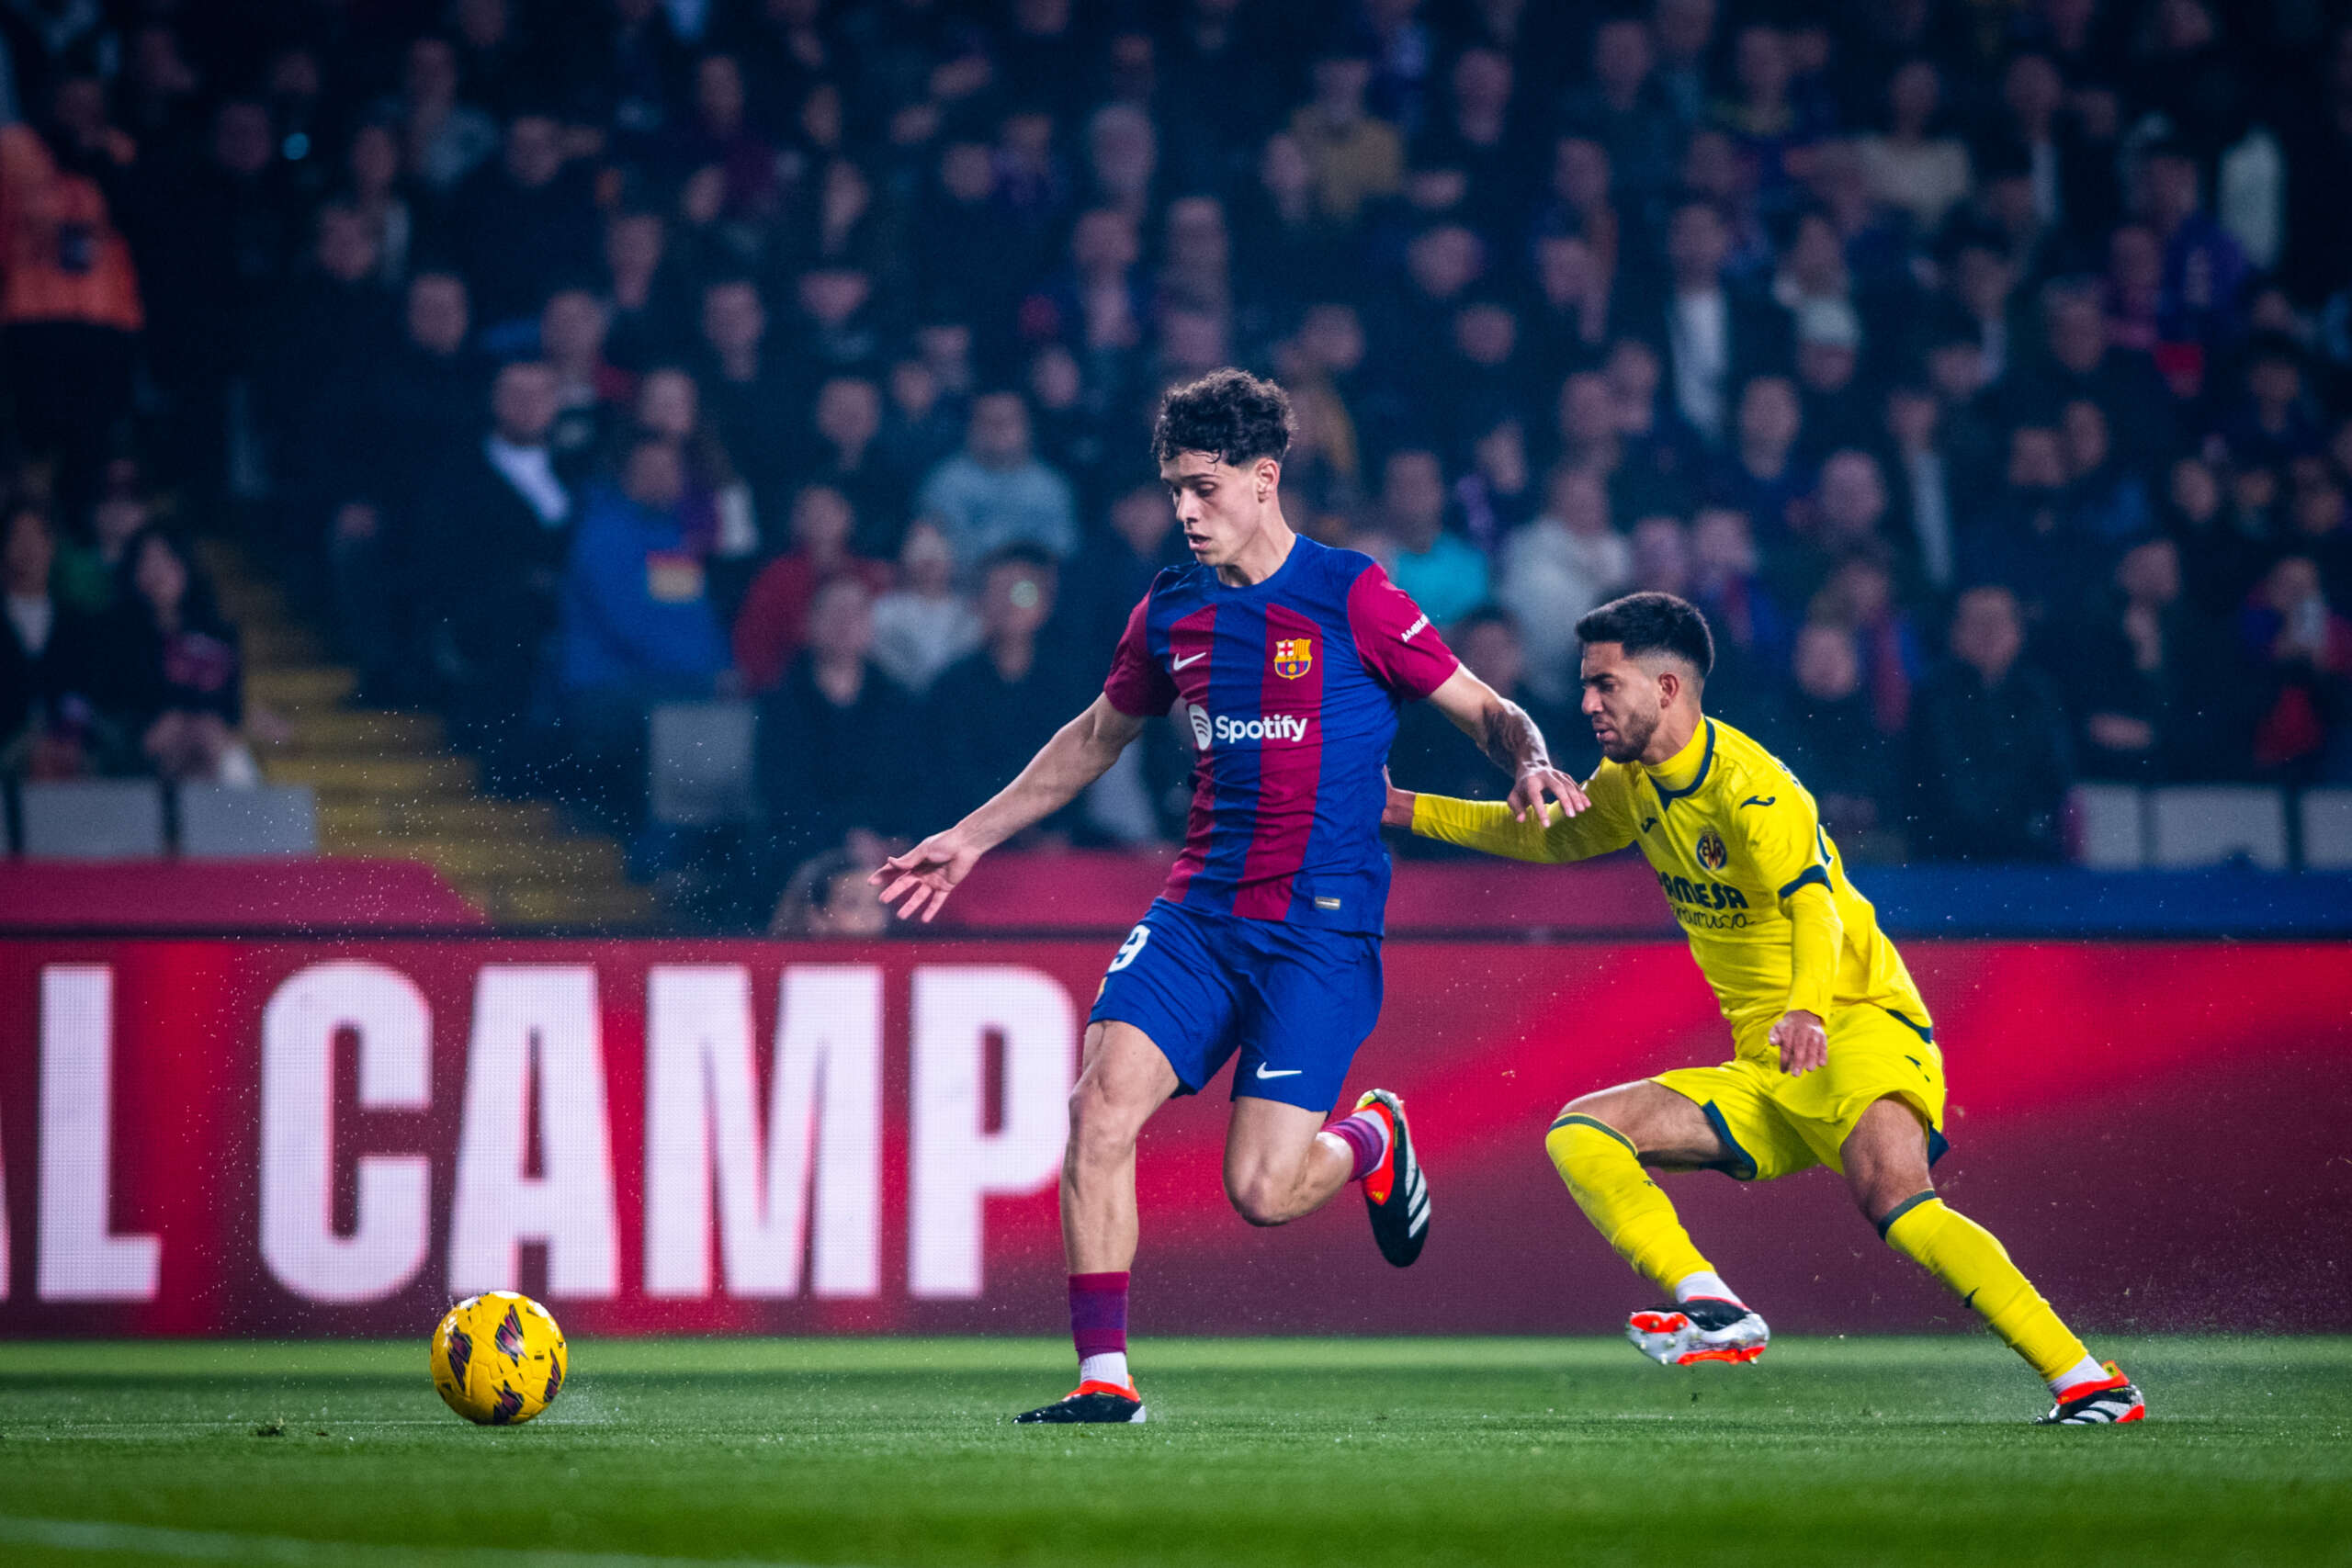 ESPANHOL: Em jogo de oito gols, Villarreal bate o Barcelona e amplia crise no rival